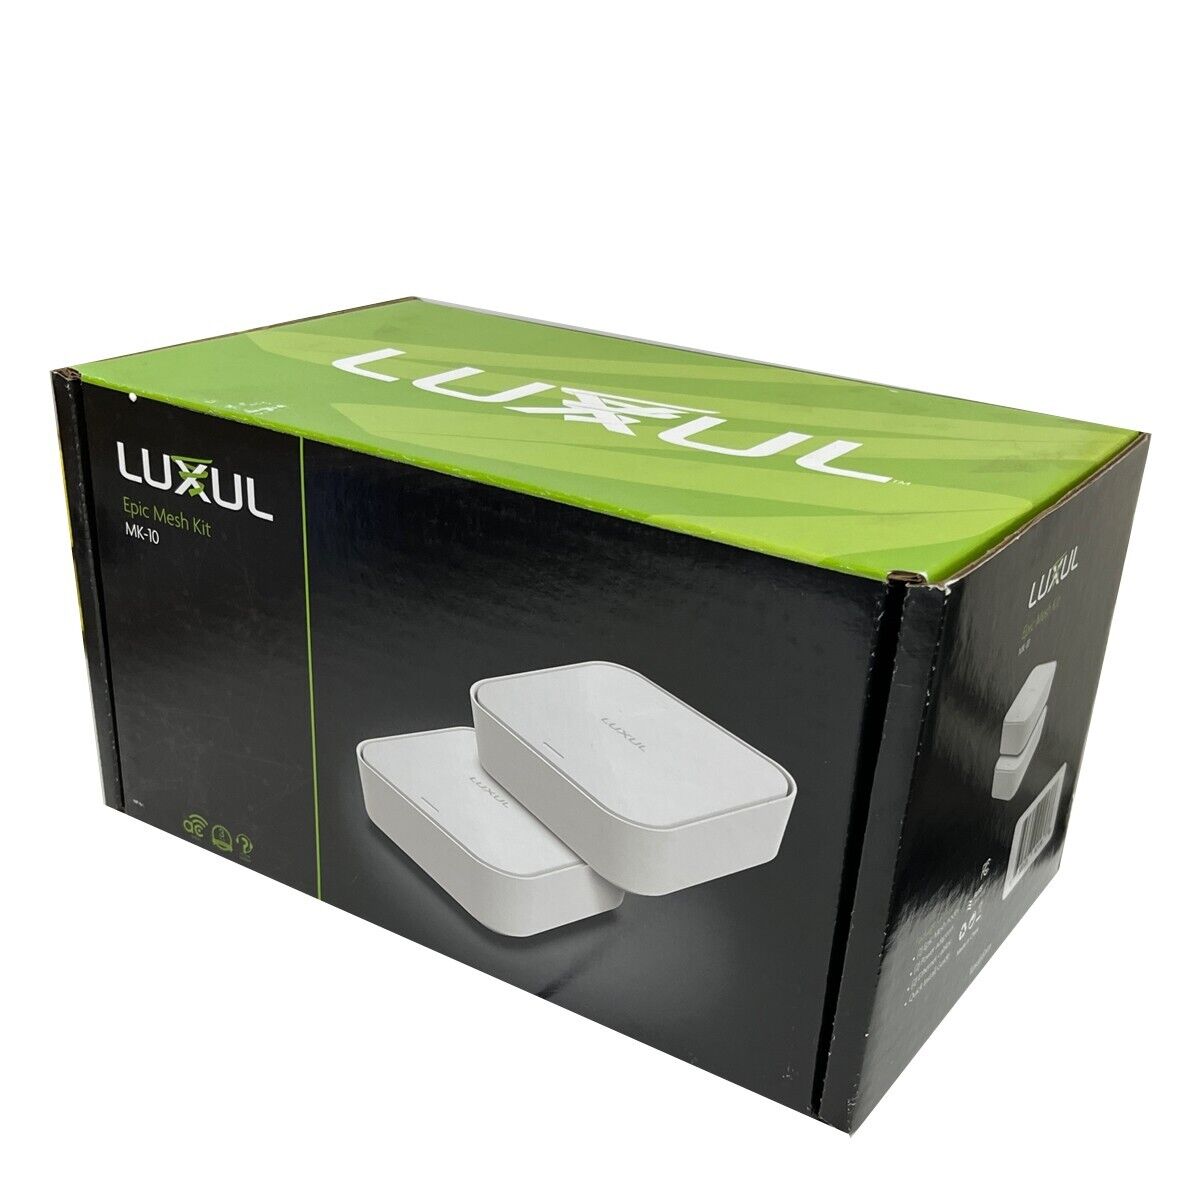 Luxul+Mk-10+Epic+Mesh+Node+Kit+-+White for sale online | eBay